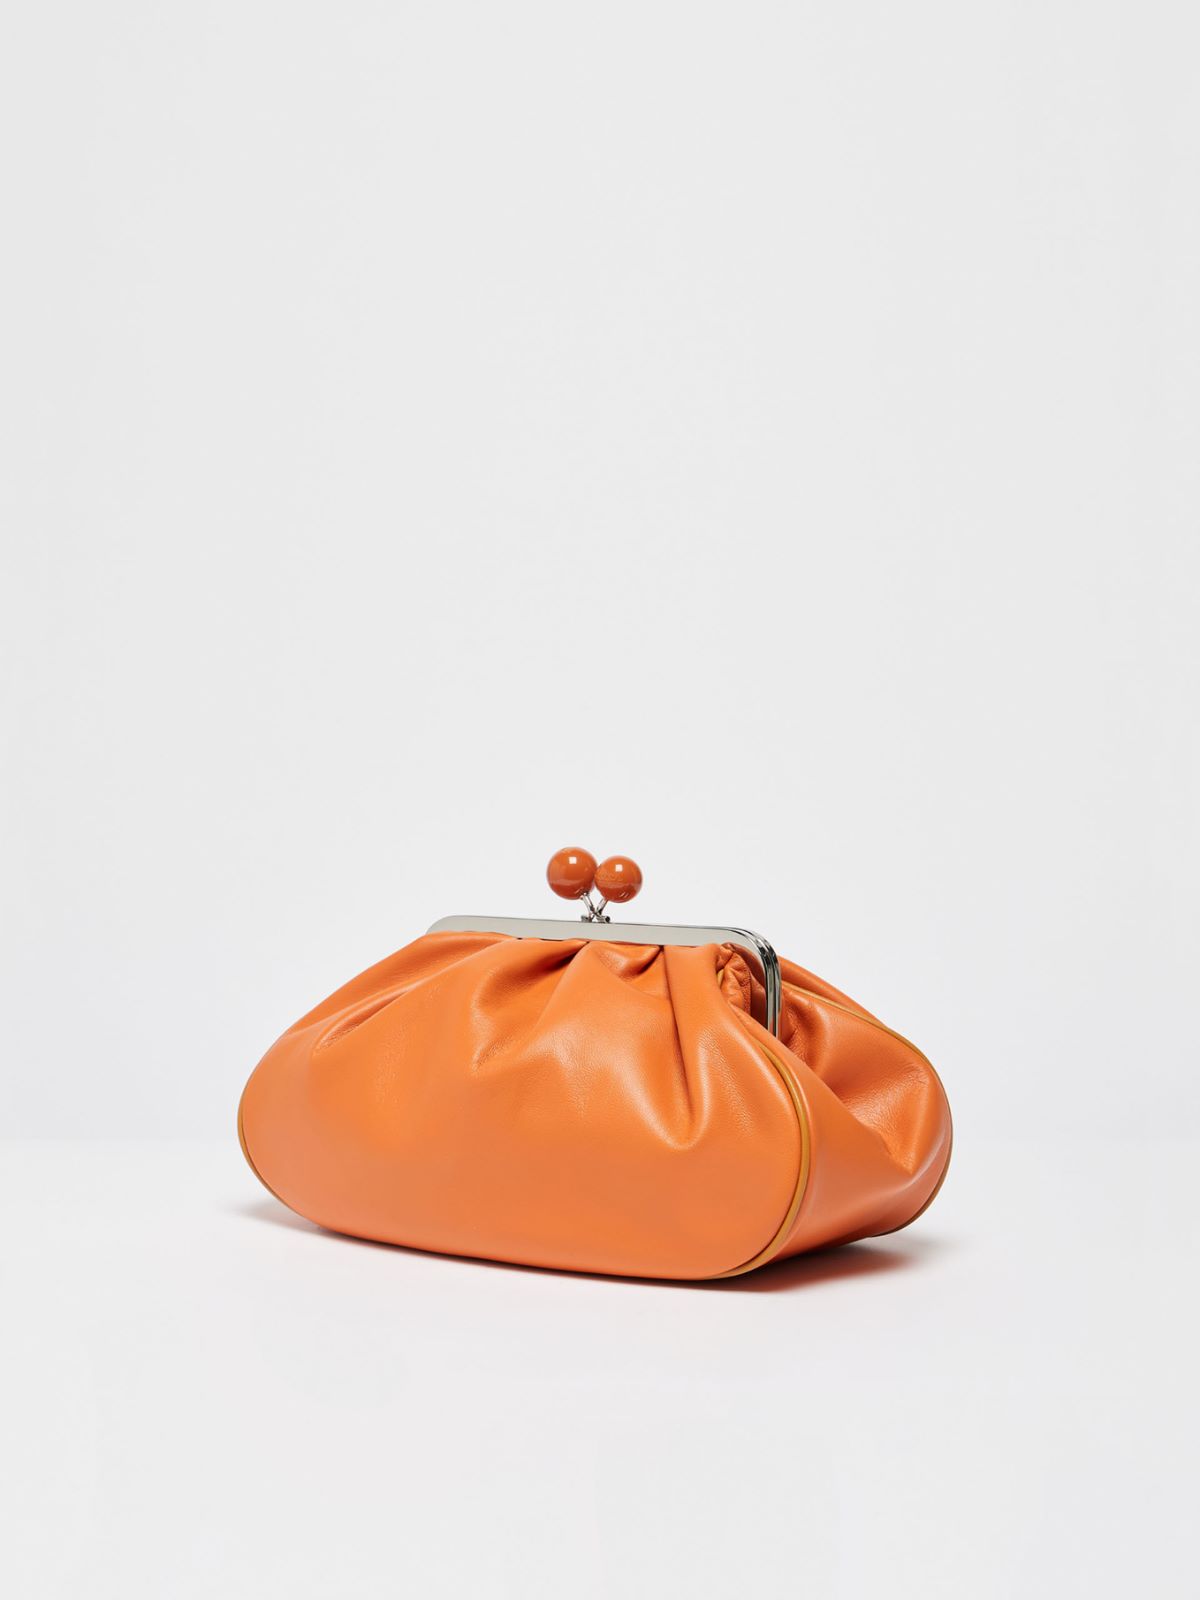 Medium Pasticcino Bag in nappa leather - TANGERINE - Weekend Max Mara - 2